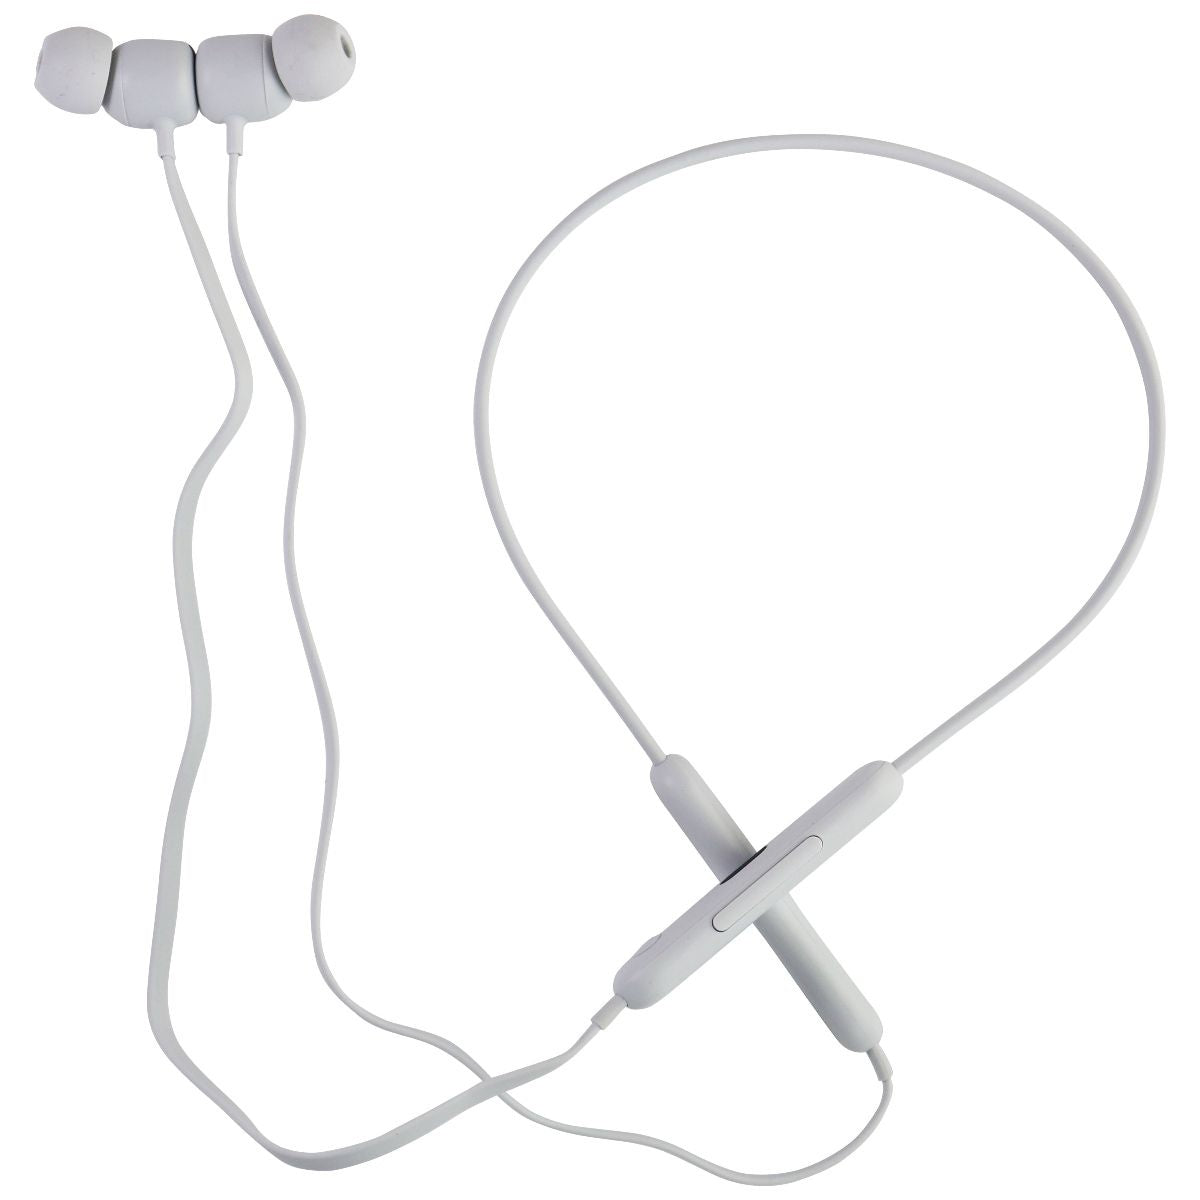 Beats Flex Wireless Bluetooth Neckband Earbuds - Silver Portable Audio - Headphones Beats    - Simple Cell Bulk Wholesale Pricing - USA Seller